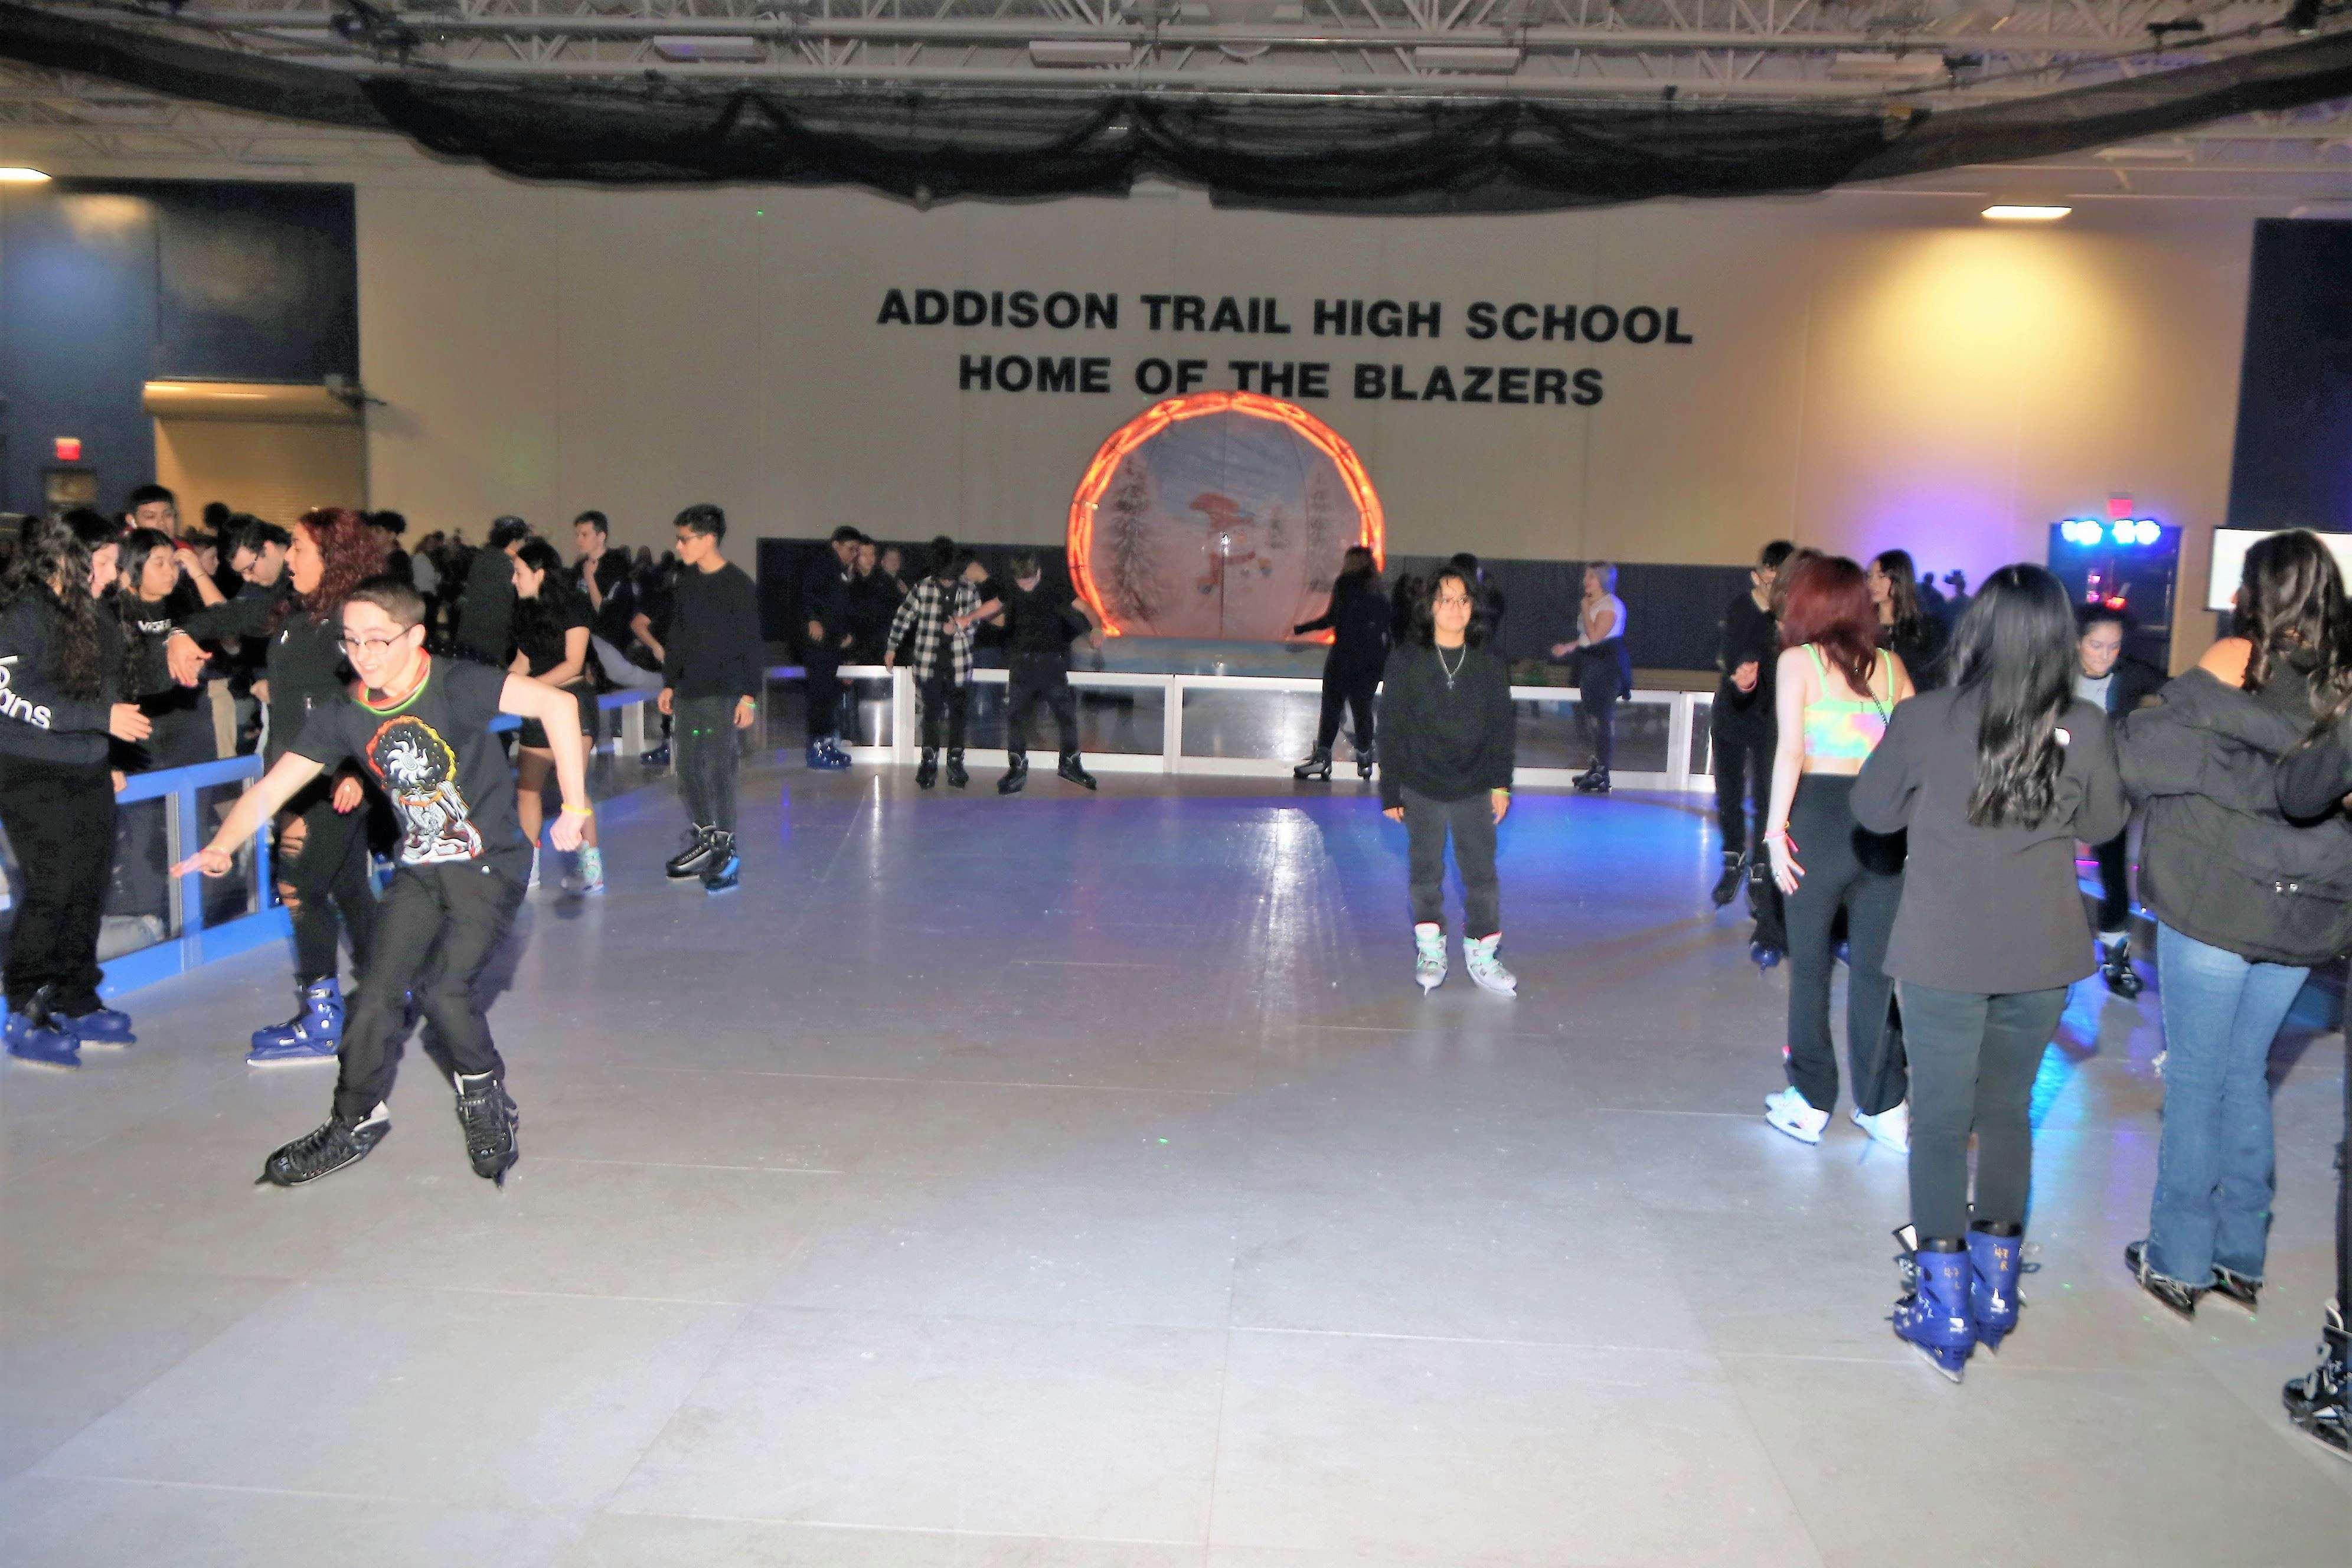 Addison Trail students enjoy WinterFest Dance as part of school spirit week